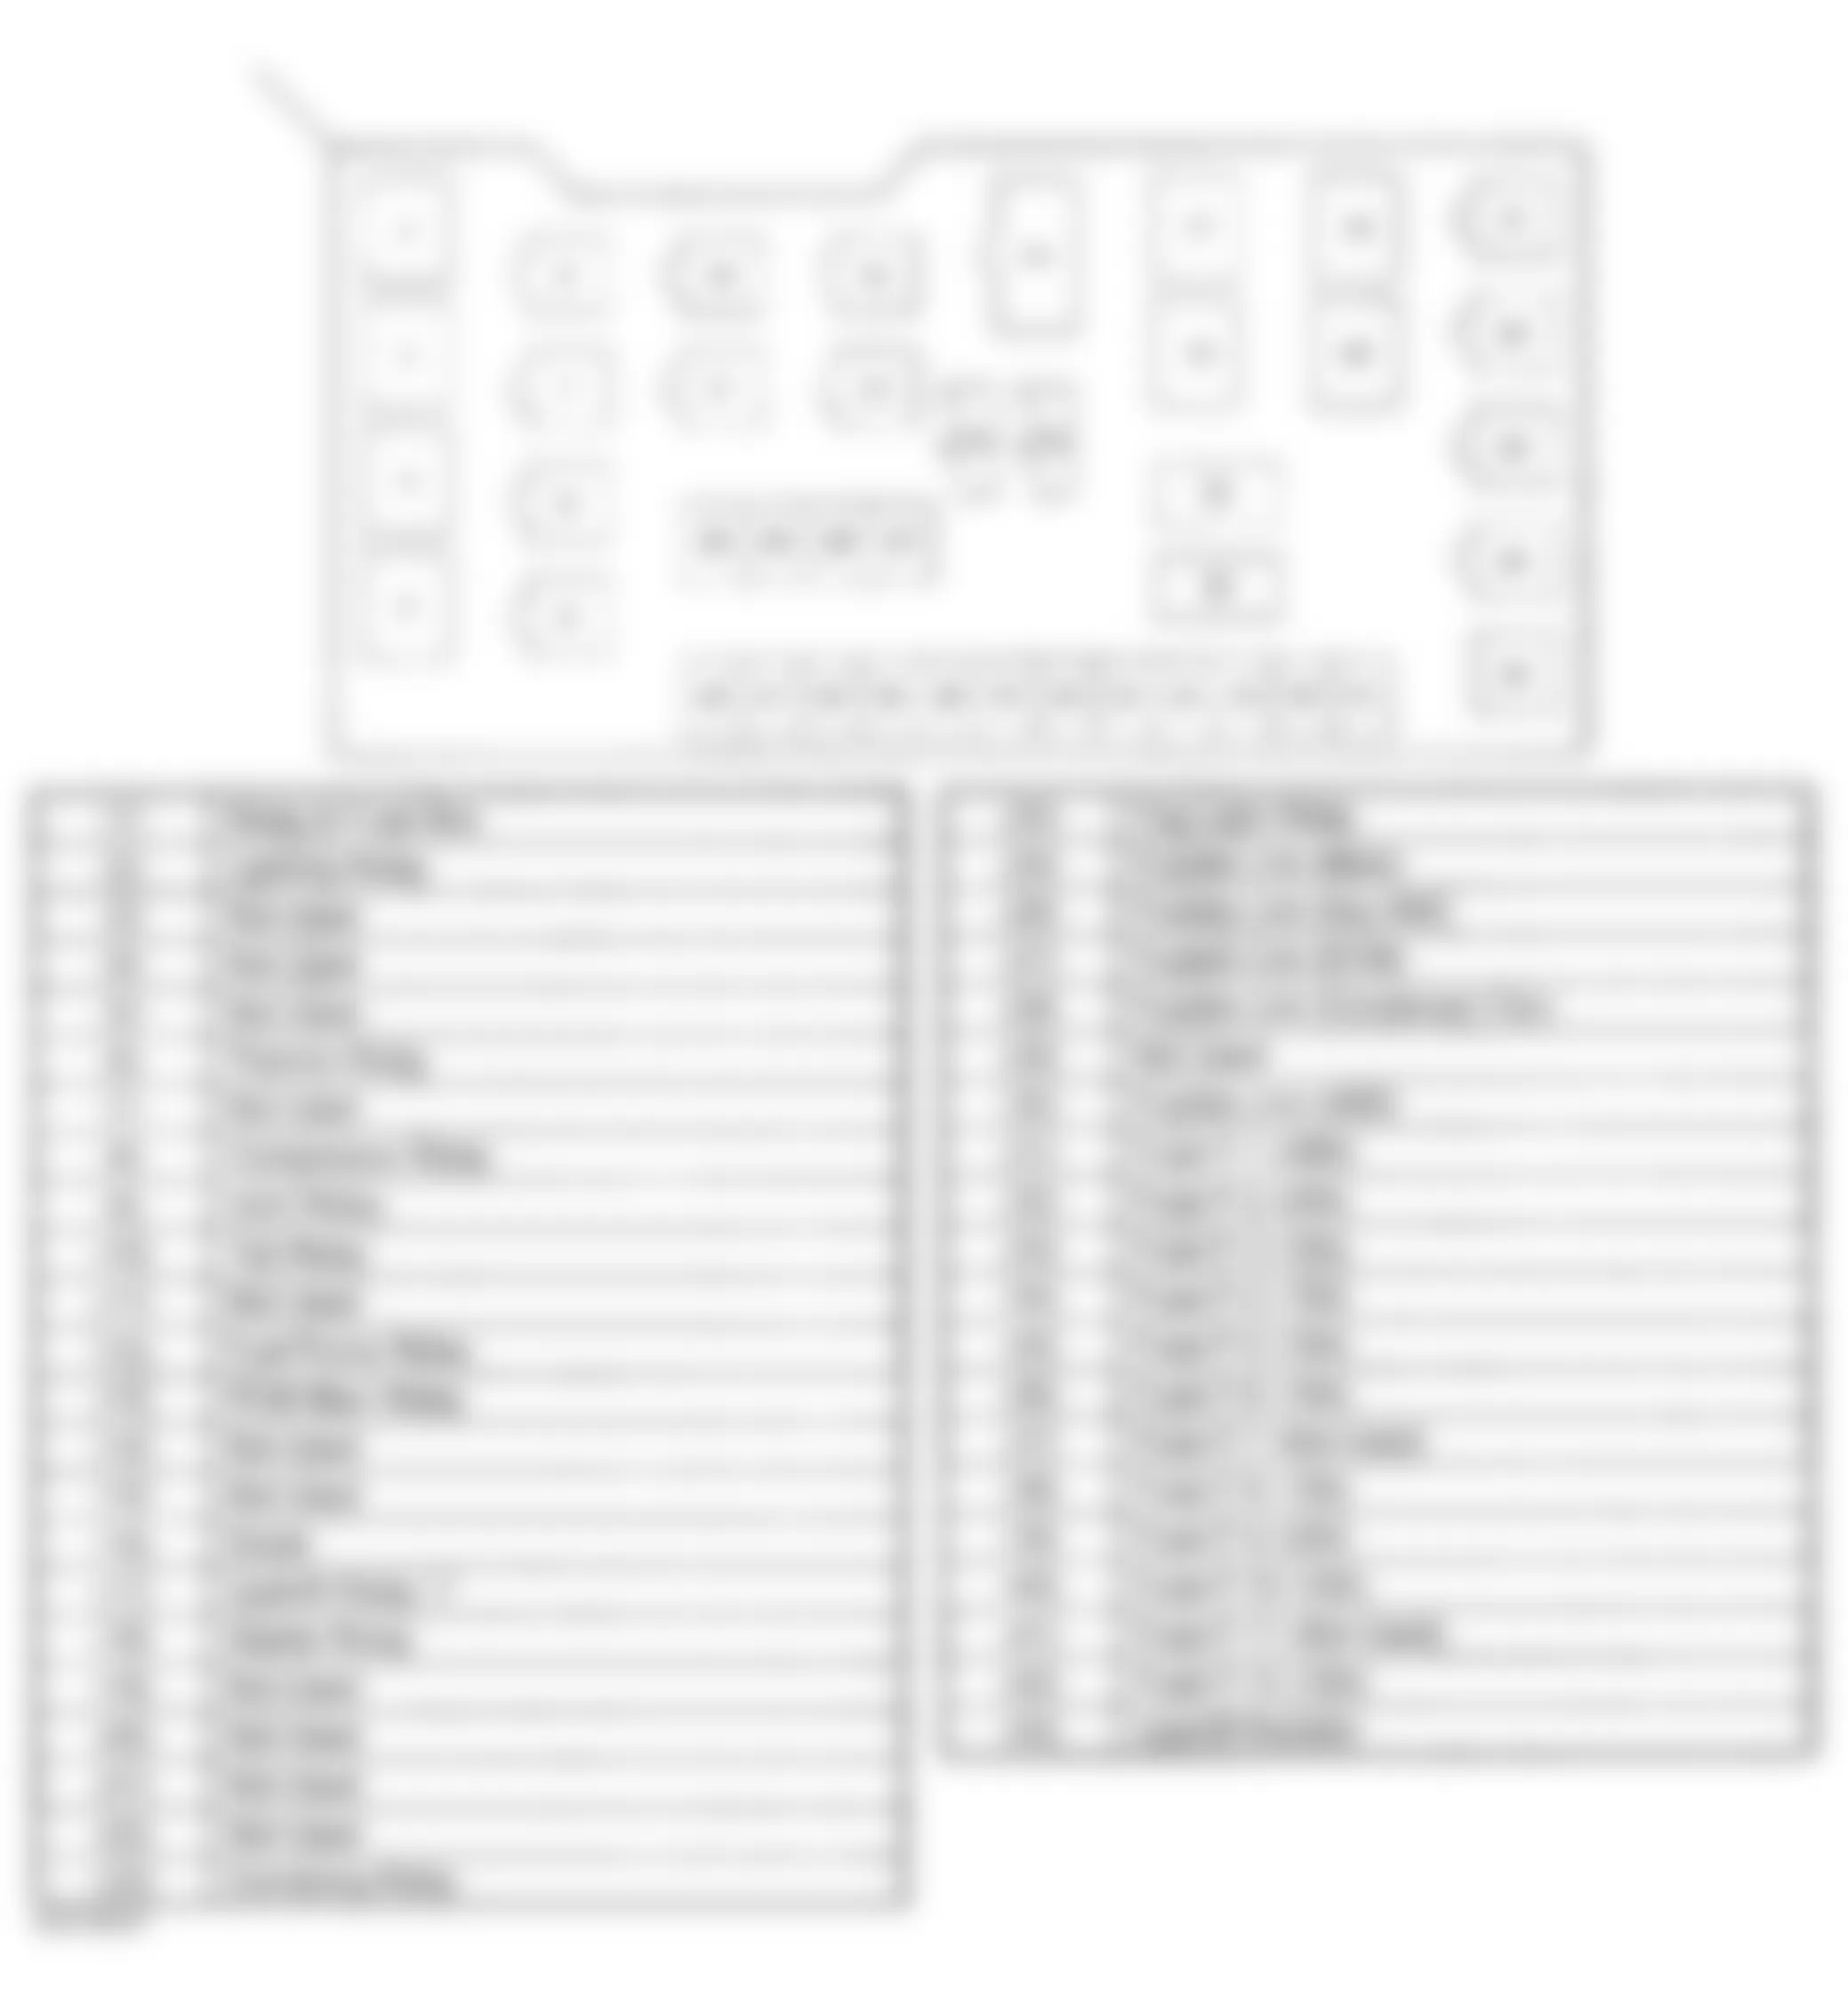 Isuzu Trooper LS 2000 - Component Locations -  Identifying Relay & Fuse Box Component Identification